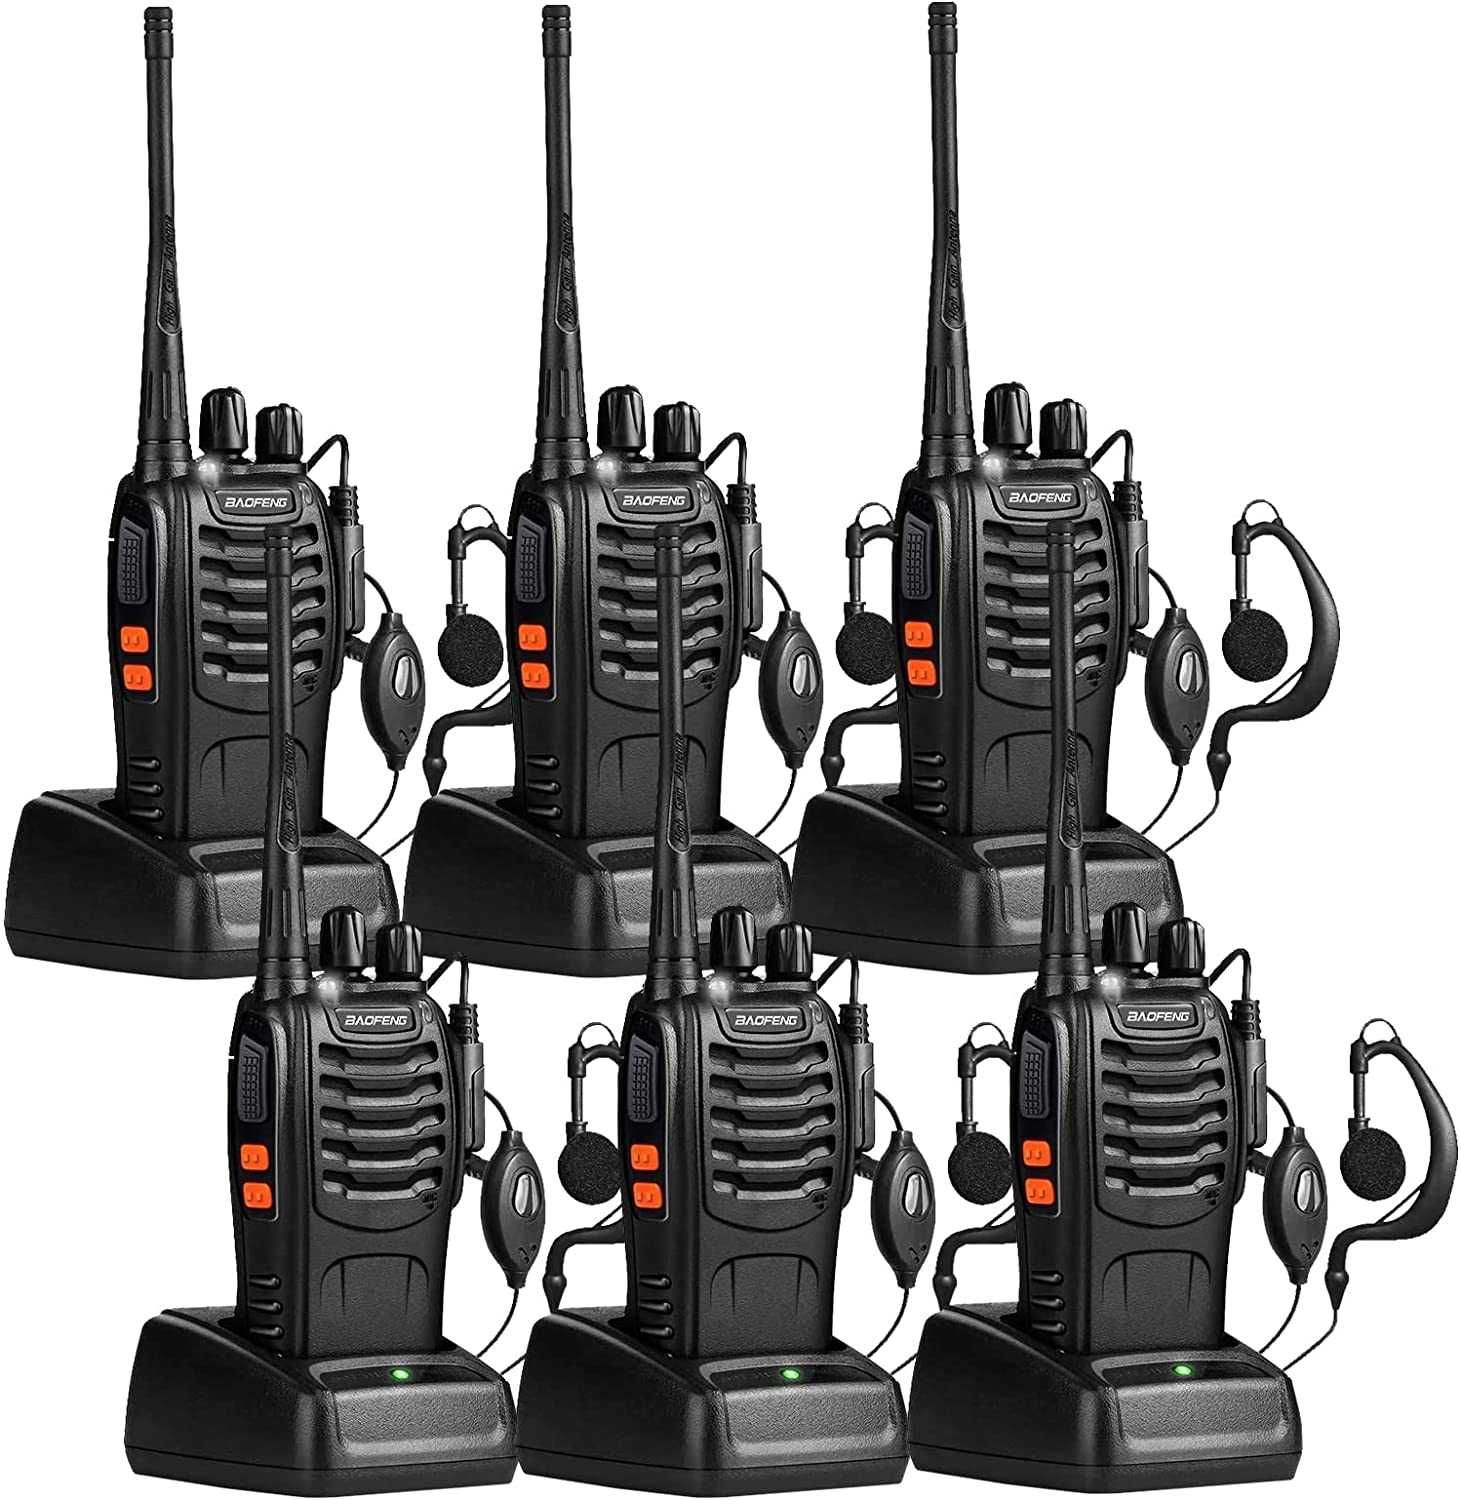 KIT 6x Walkie Talkies - Intercomunicadores Rádio + Acessórios - NOVOS